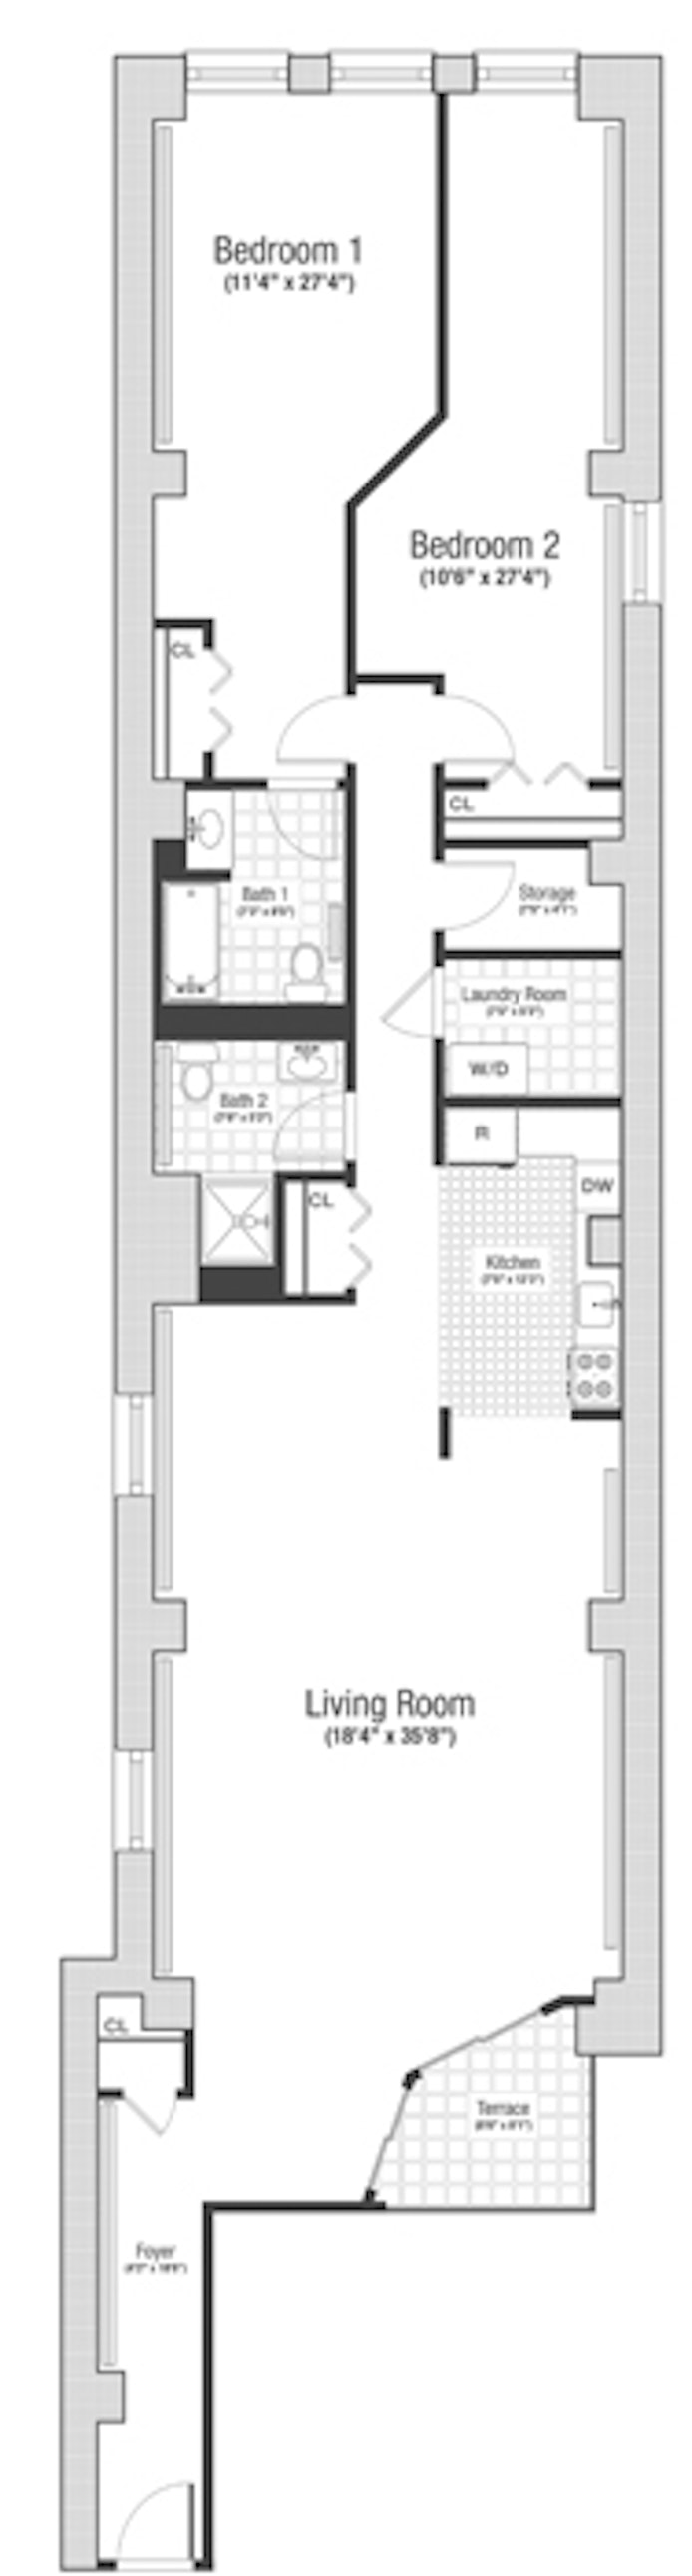 Floorplan for 36 Laight Street, 3B